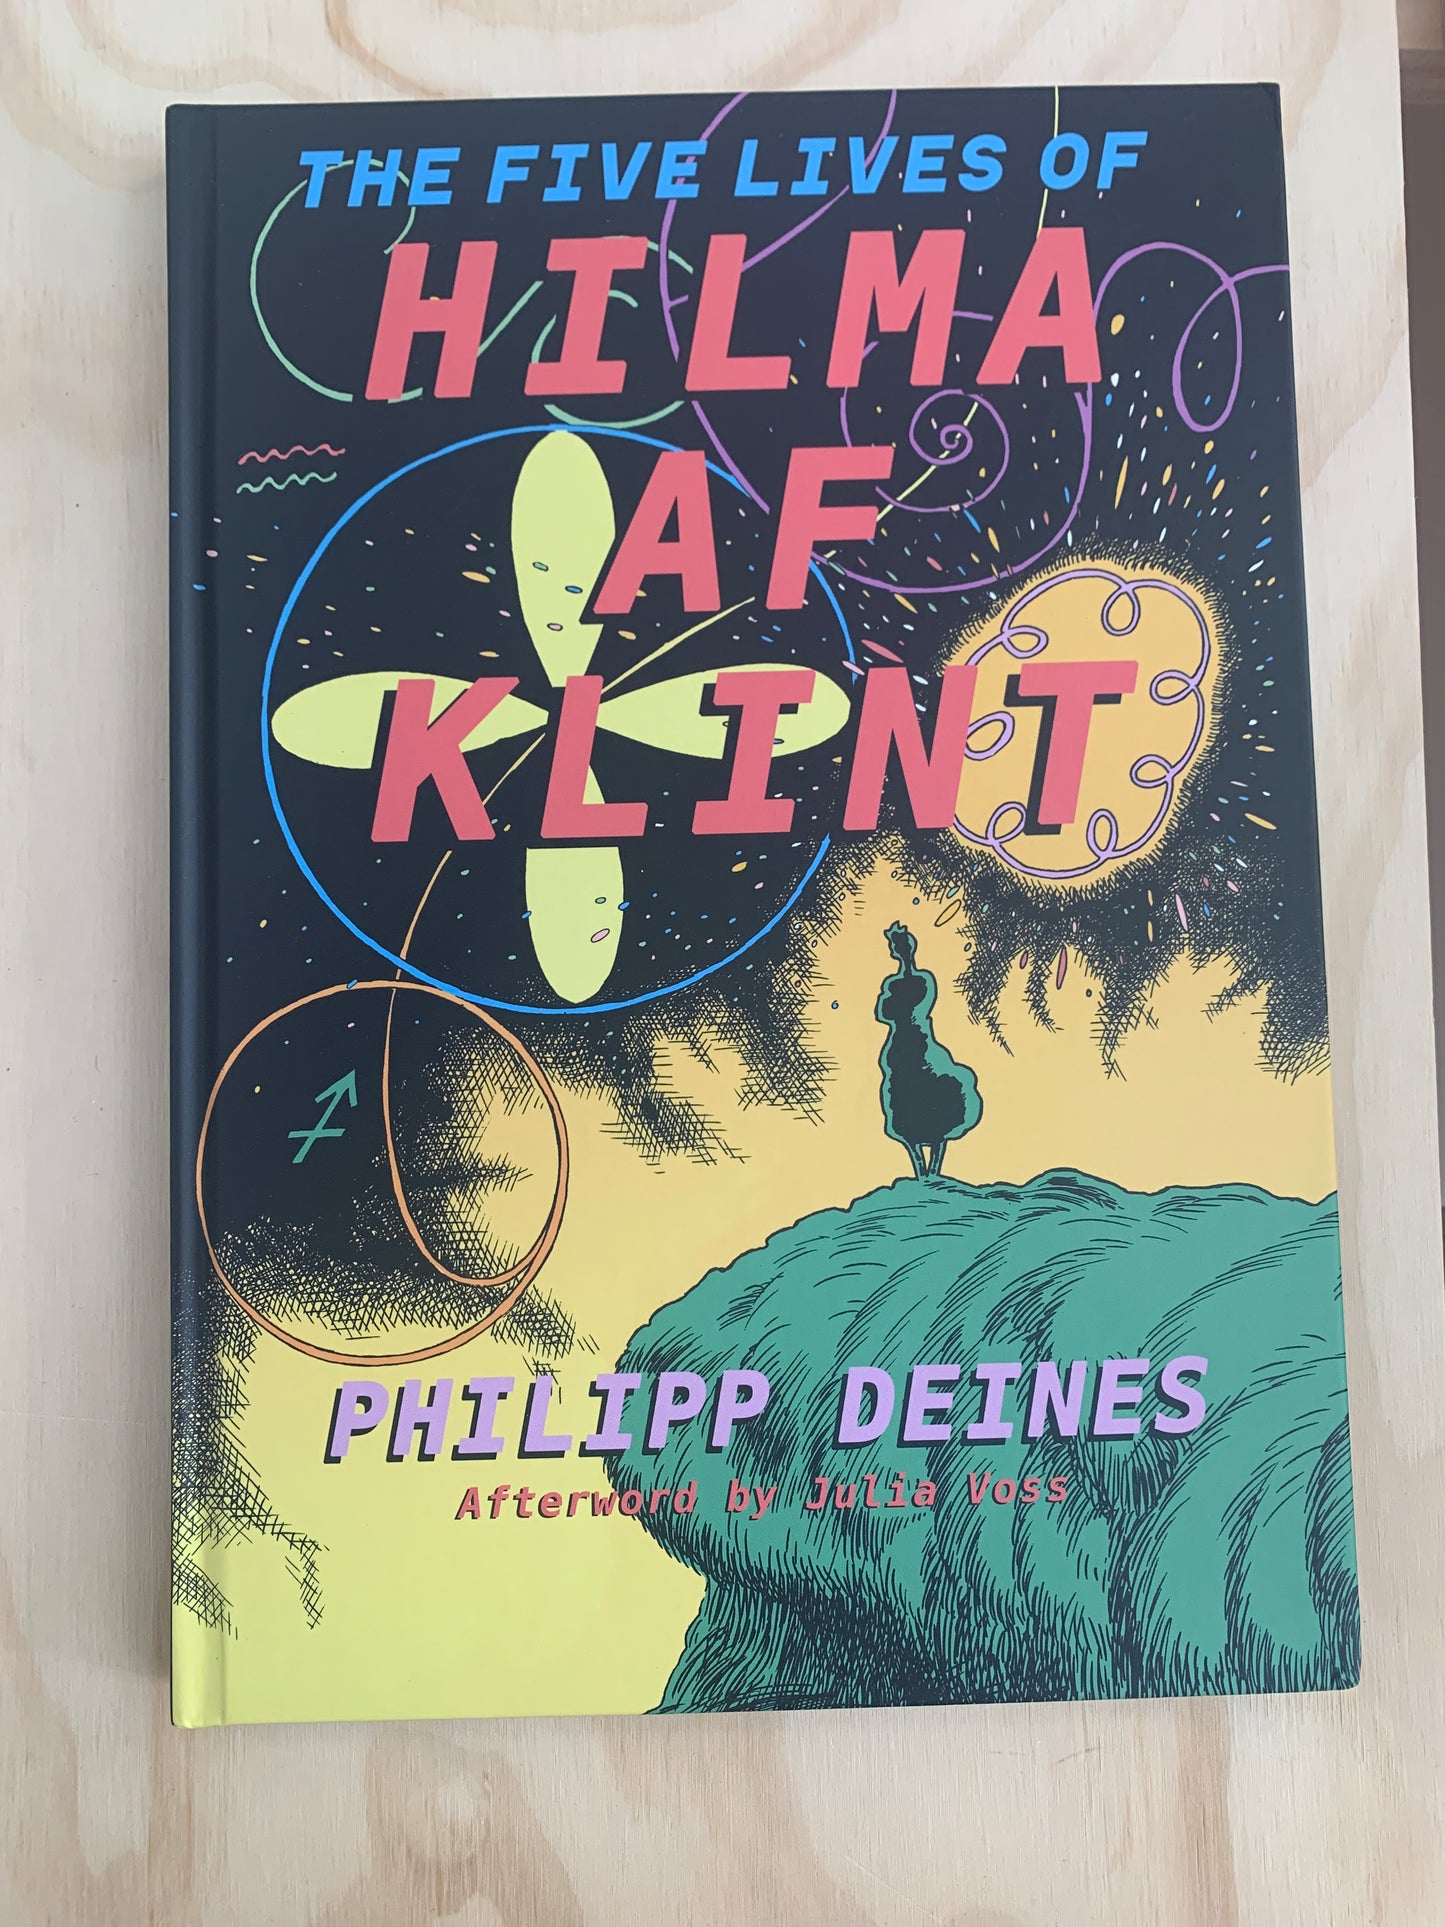 Hilma af Klint Books